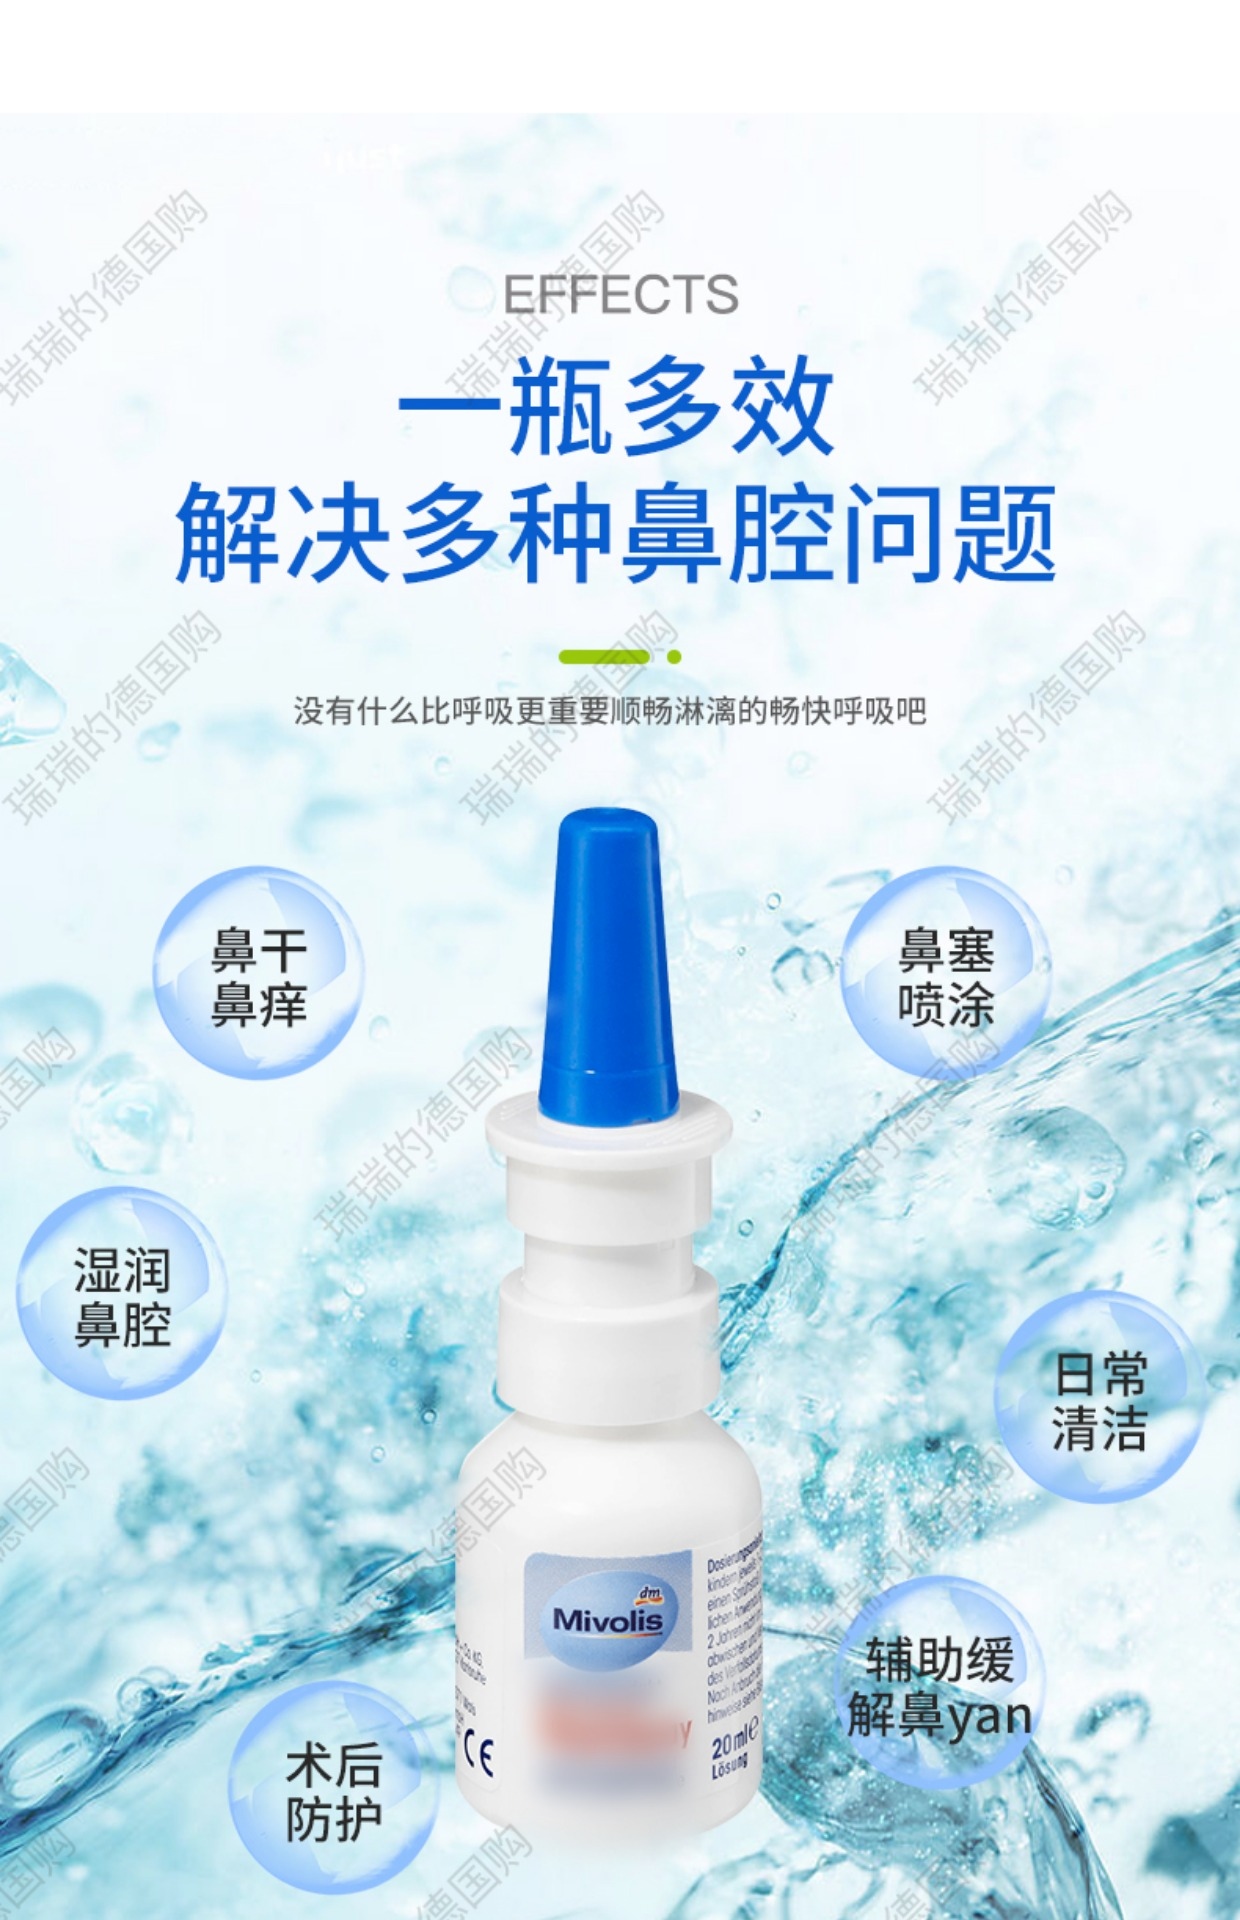 Mivolis Seawater Nose Spray, 20ml - German Drugstore